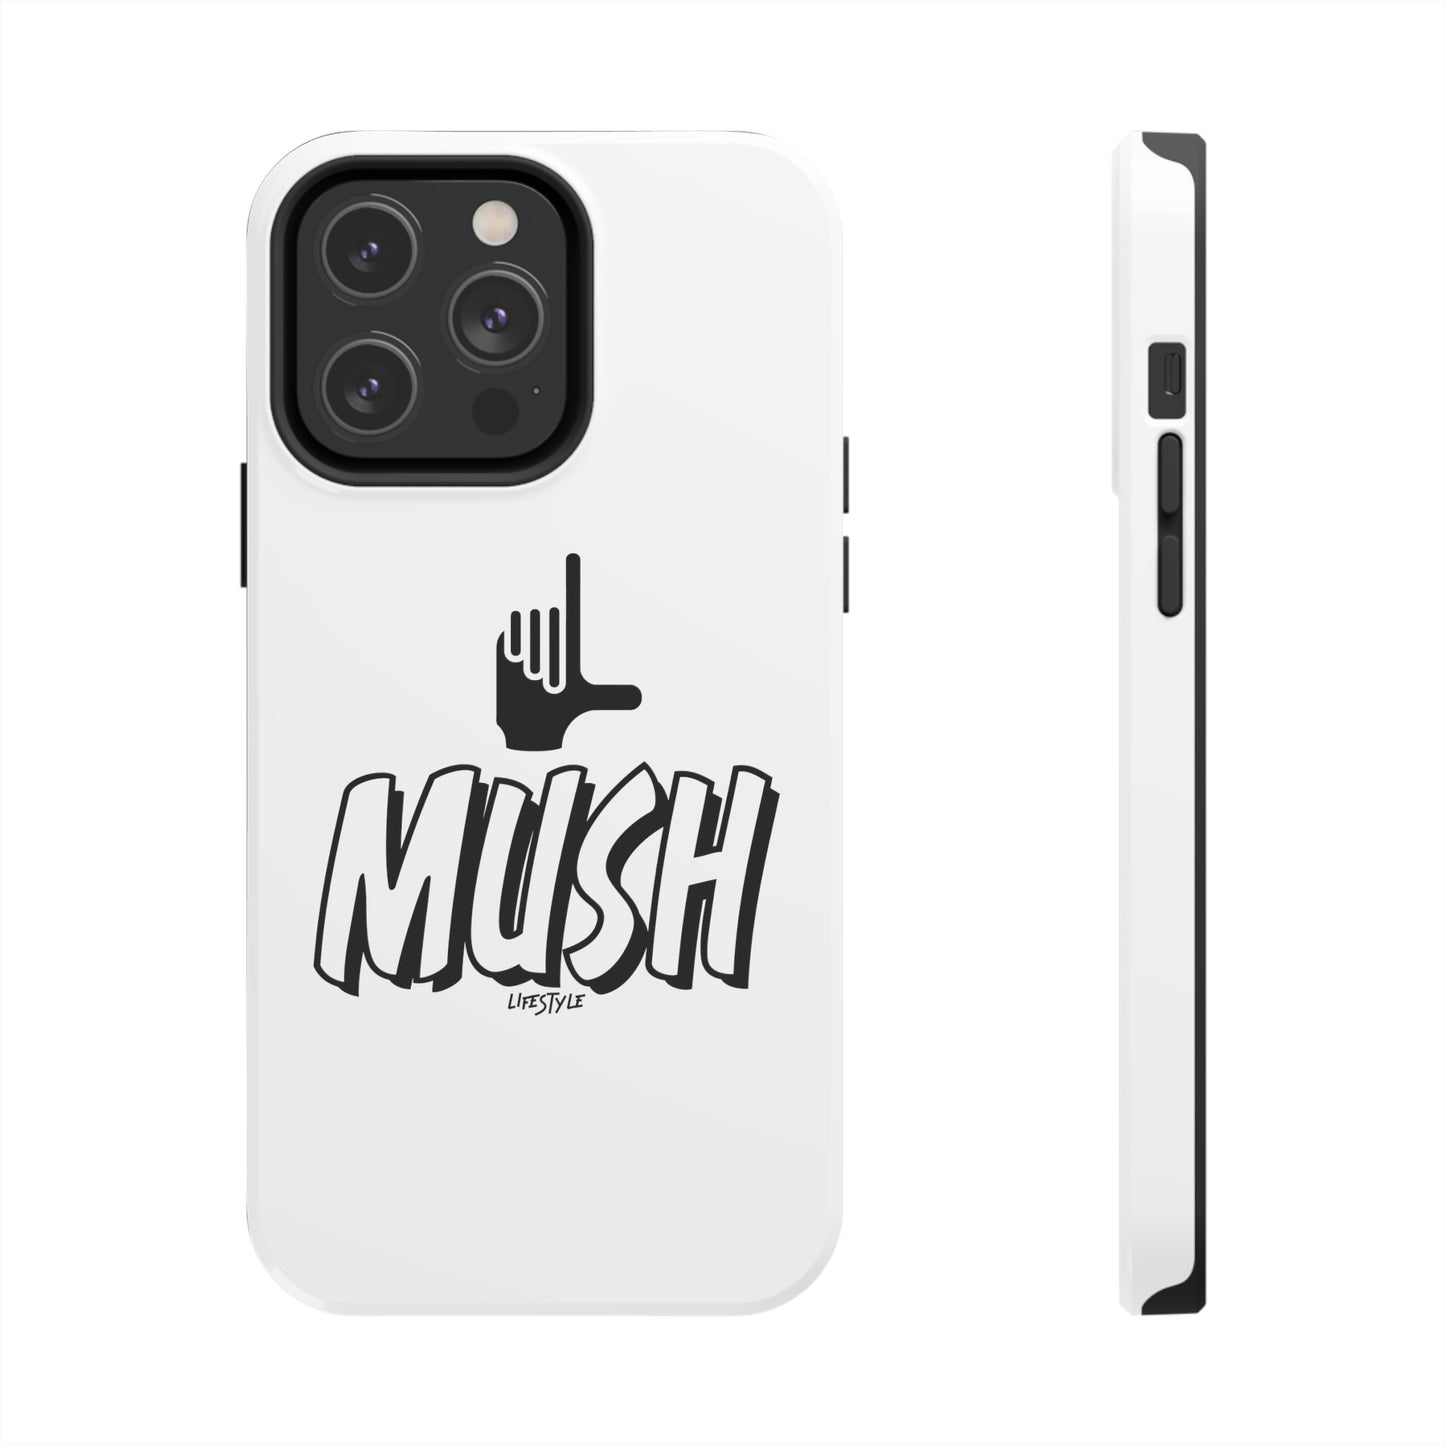 MUSH Tough Phone Cases